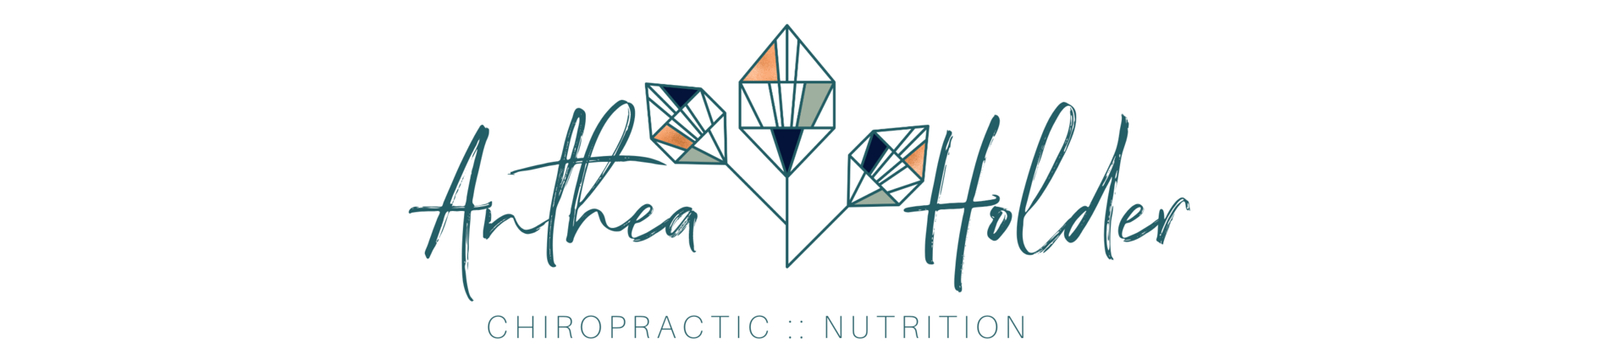 Anthea Holder - Chiropractic & Nutrition